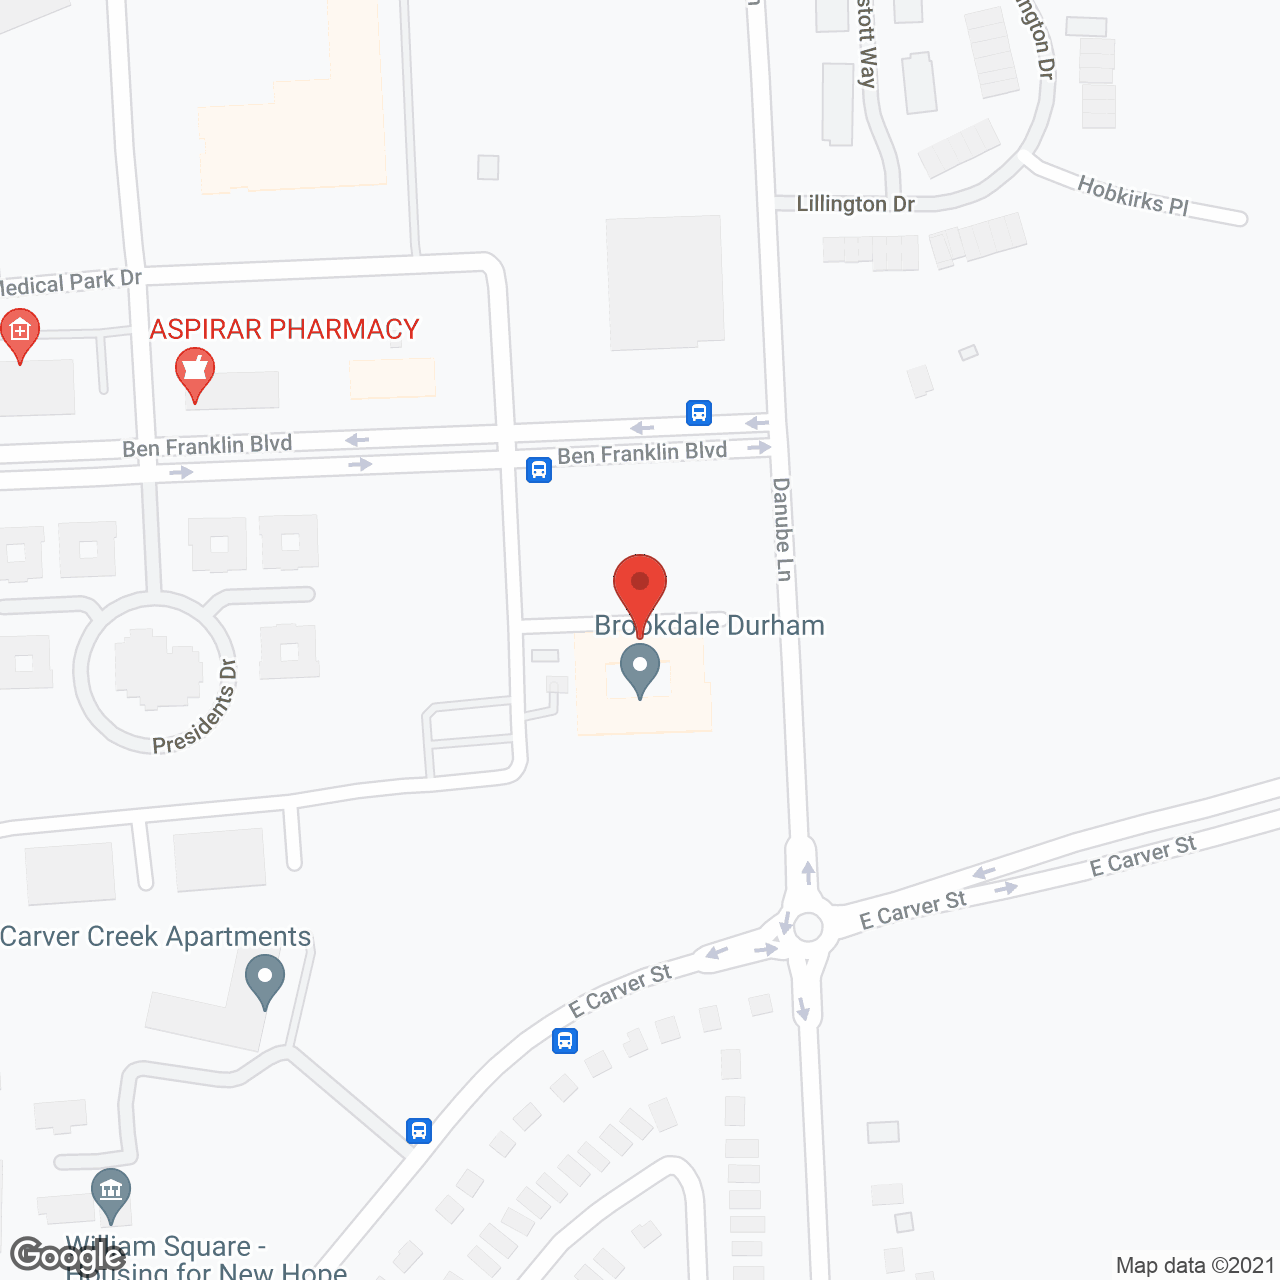 Brookdale Durham in google map